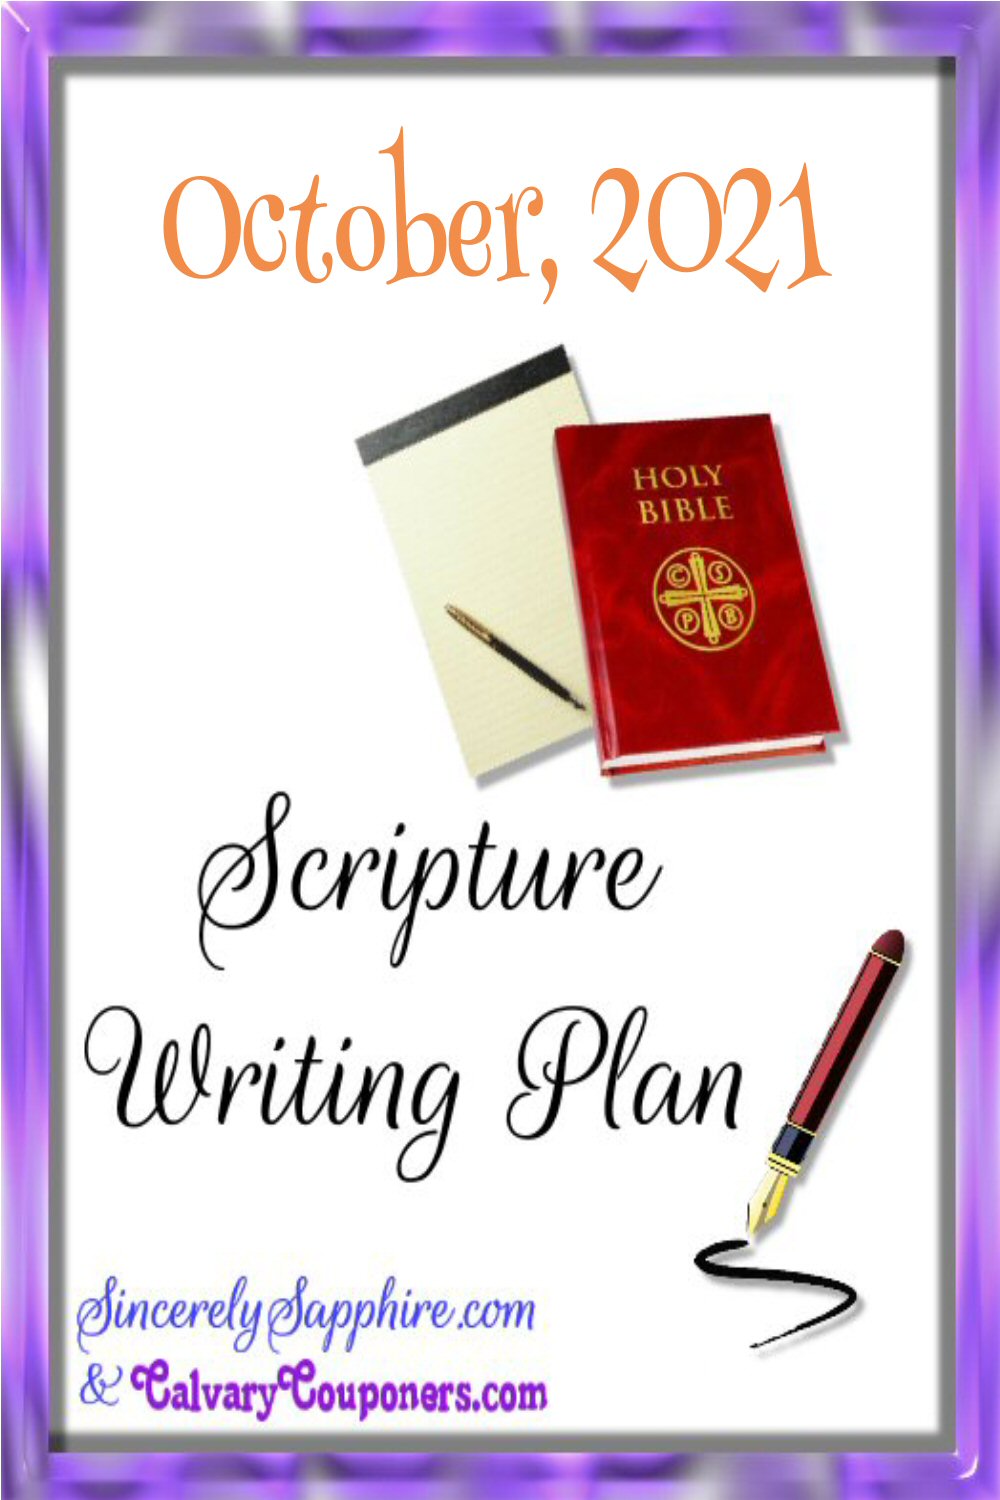 October 2021 scripture writing plan header